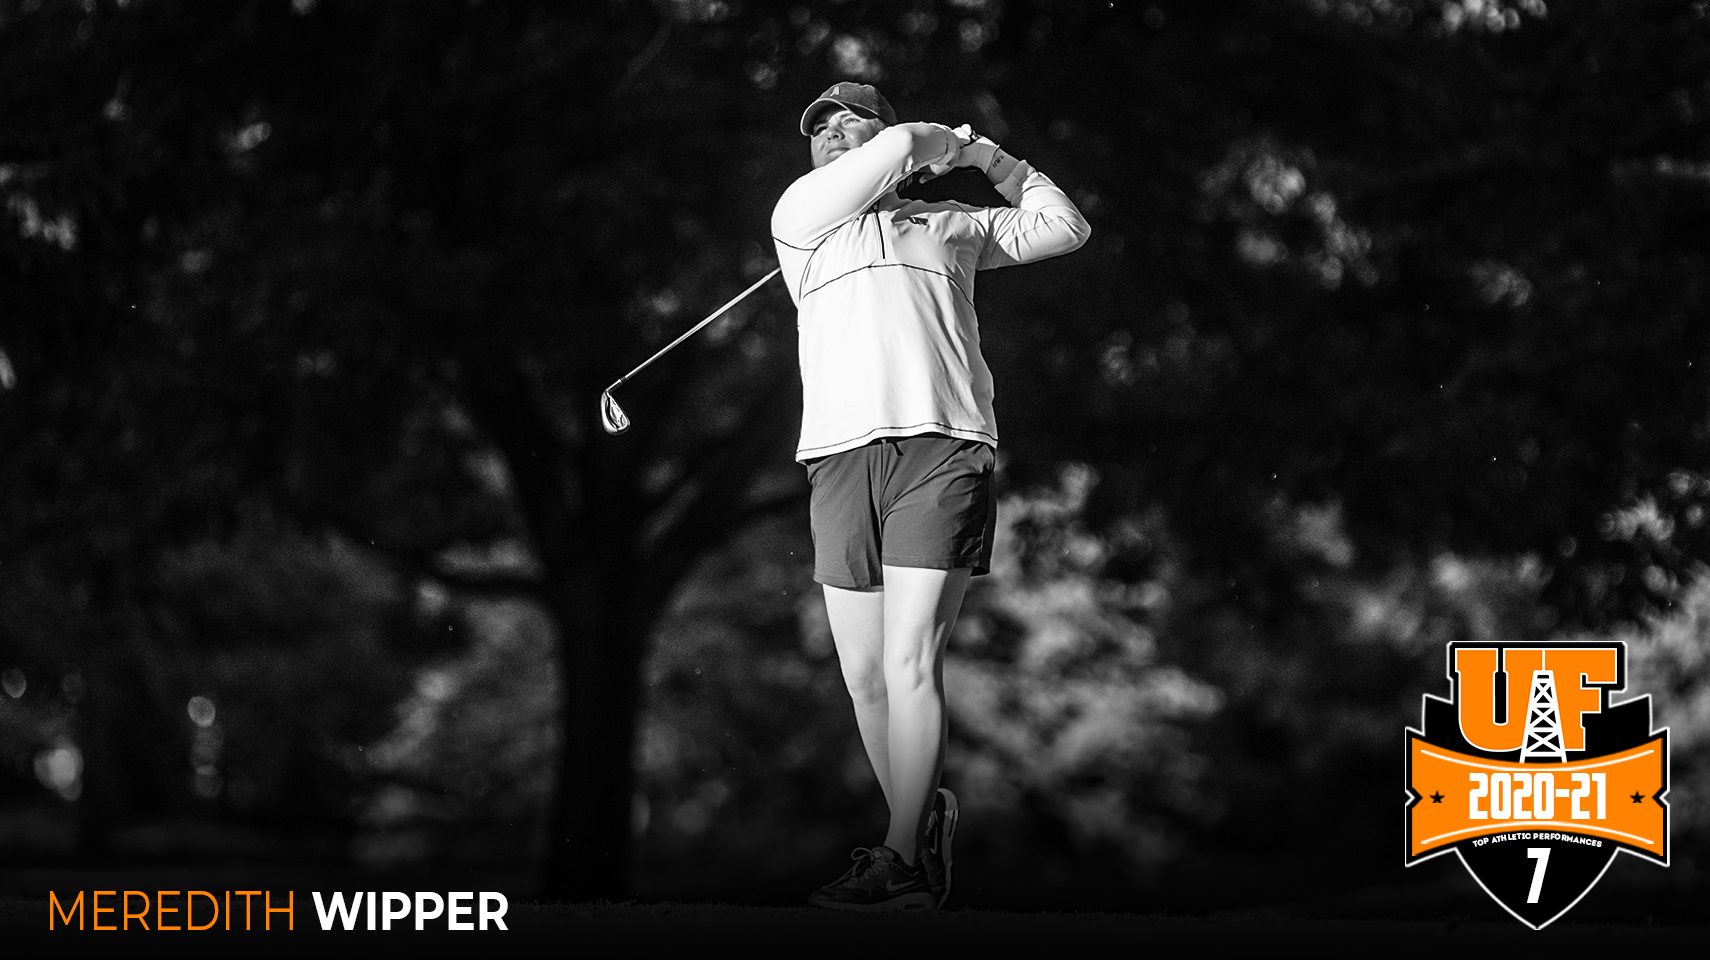 Women's golfer hitting behind trees